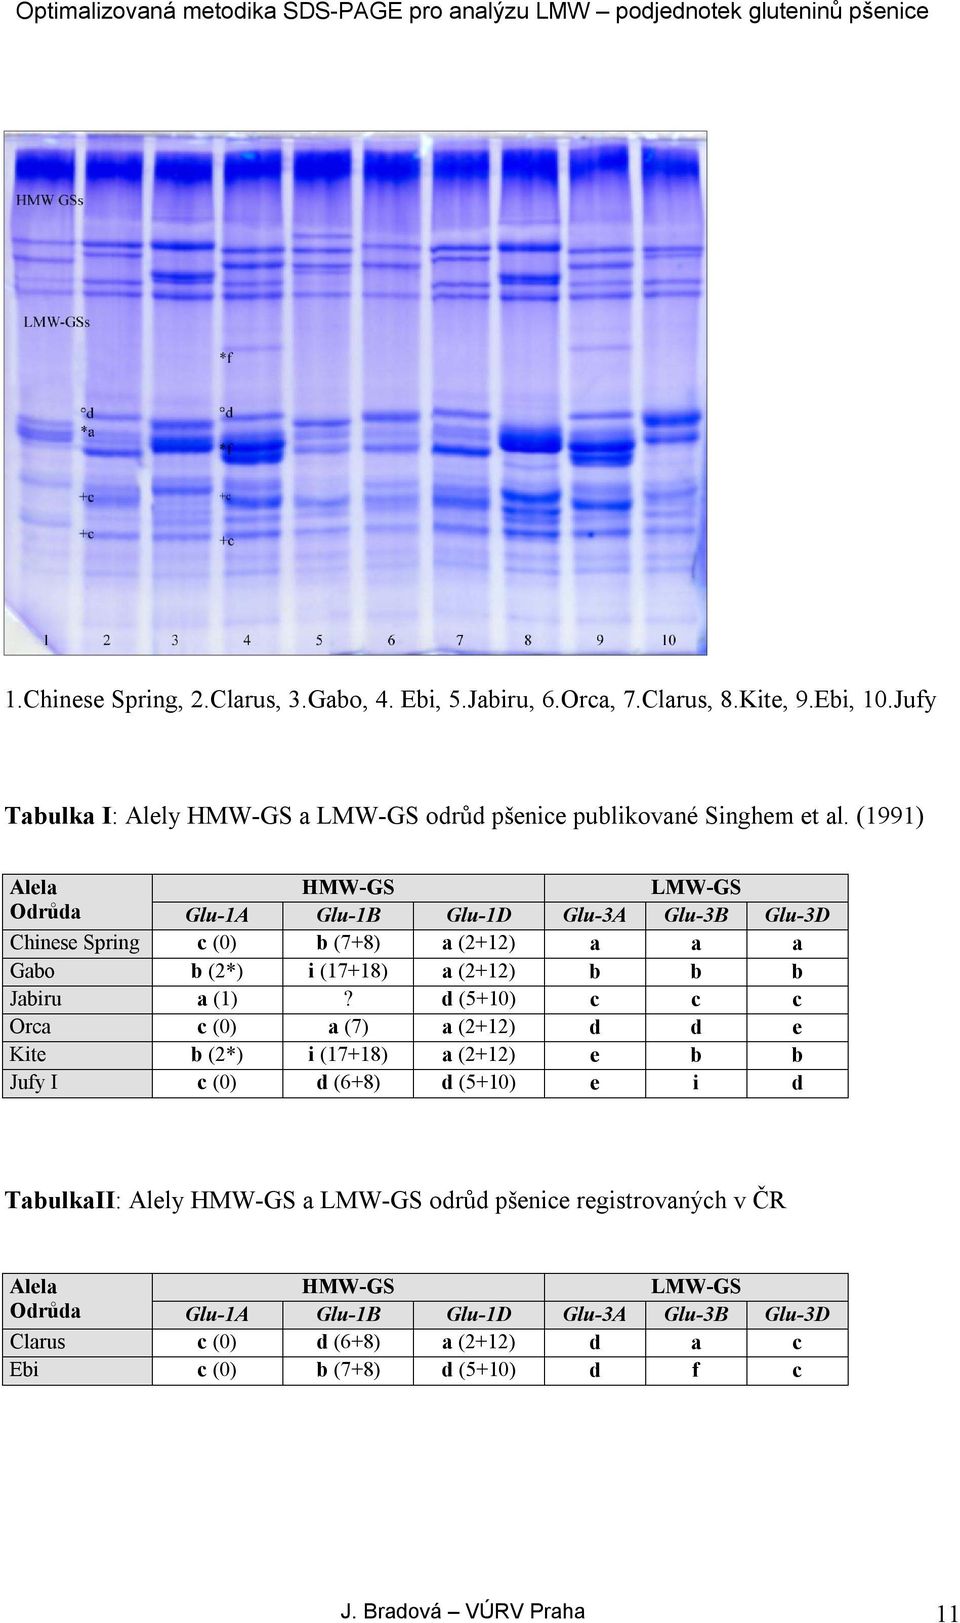 (1991) Alela Odrůda Chinese Spring Gabo Jabiru Orca Kite Jufy I Glu-1A c (0) b (2*) a (1) c (0) b (2*) c (0) HMW-GS Glu-1B b (7+8) i (17+18)?